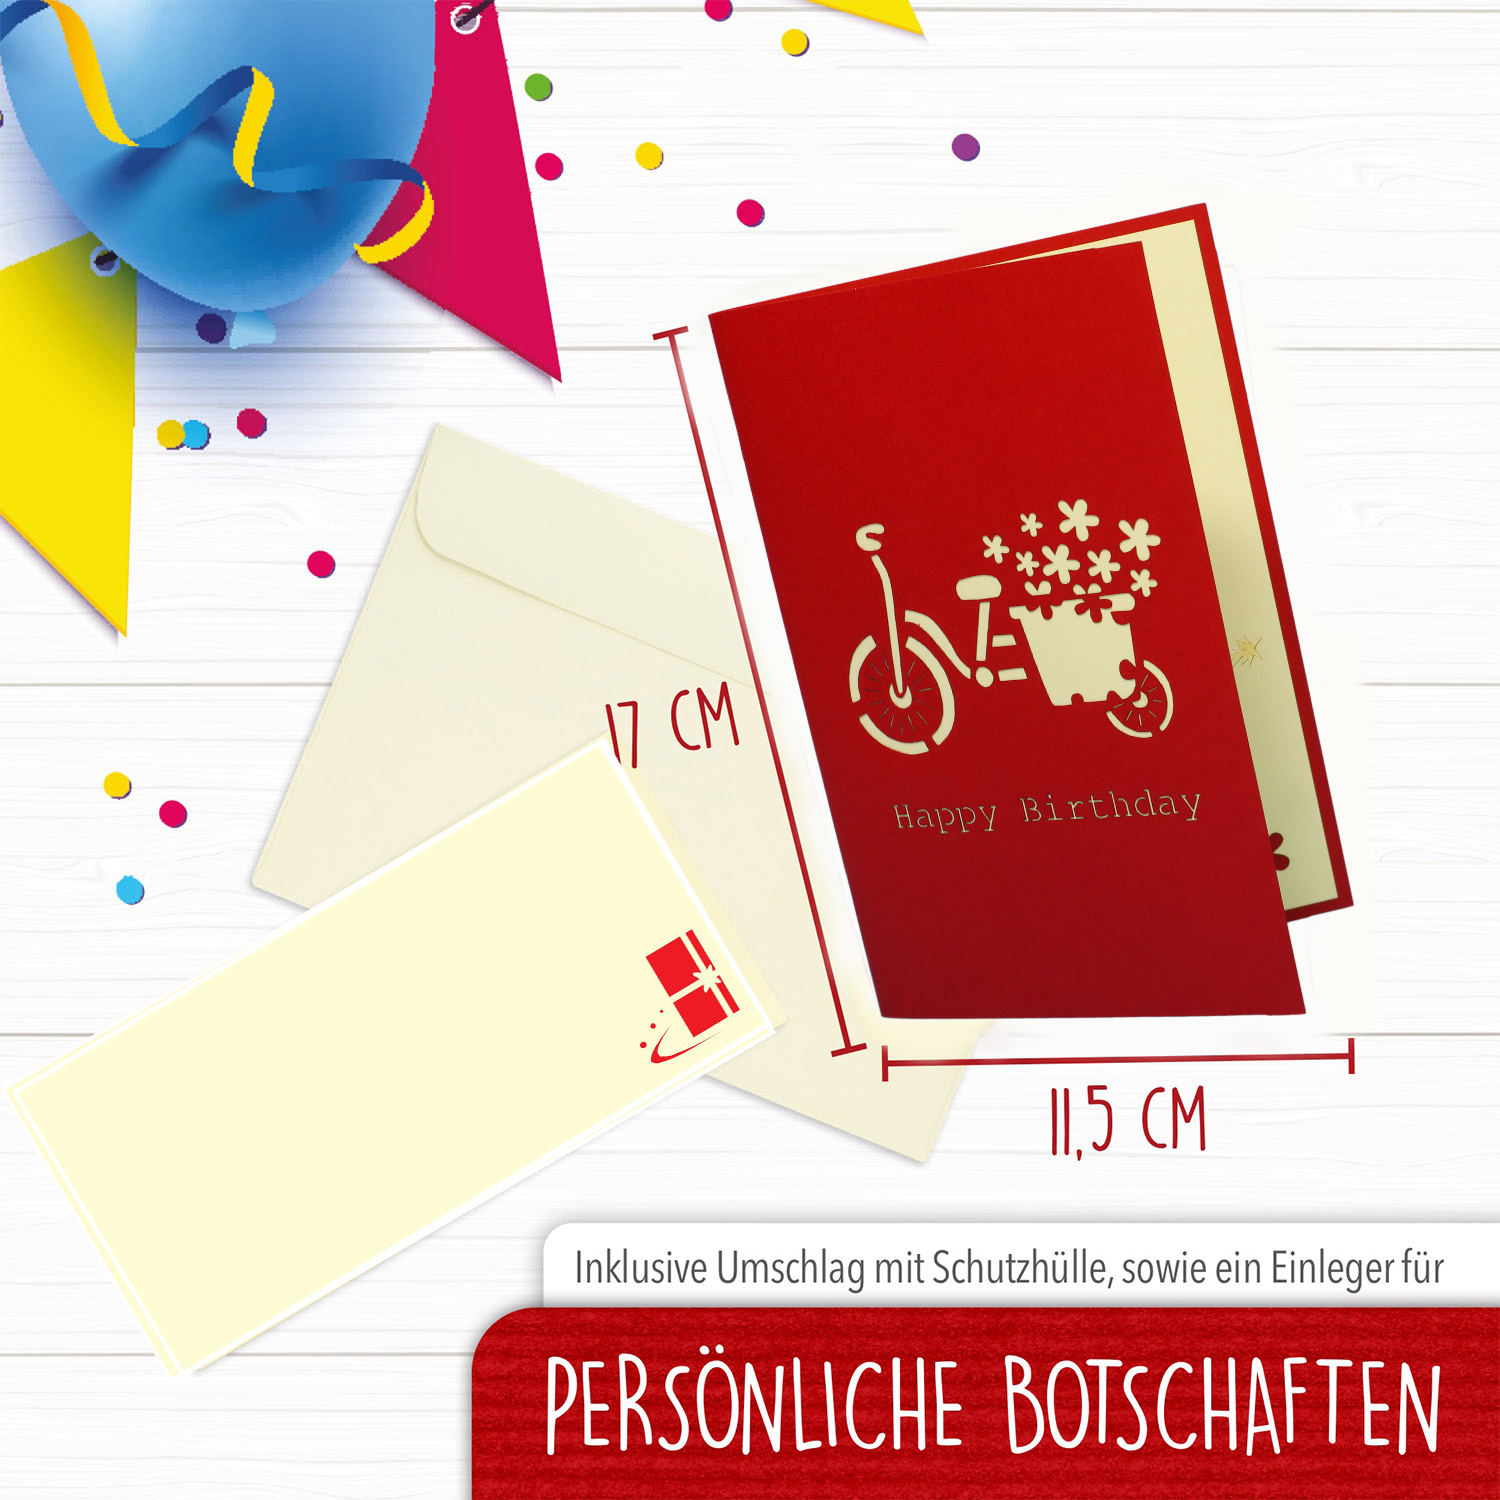 LINPOPUP Pop Up 3D Card, Birthday Card, Congratulations Voucher, Bicycle, Turtle, LINPopUp®, N9